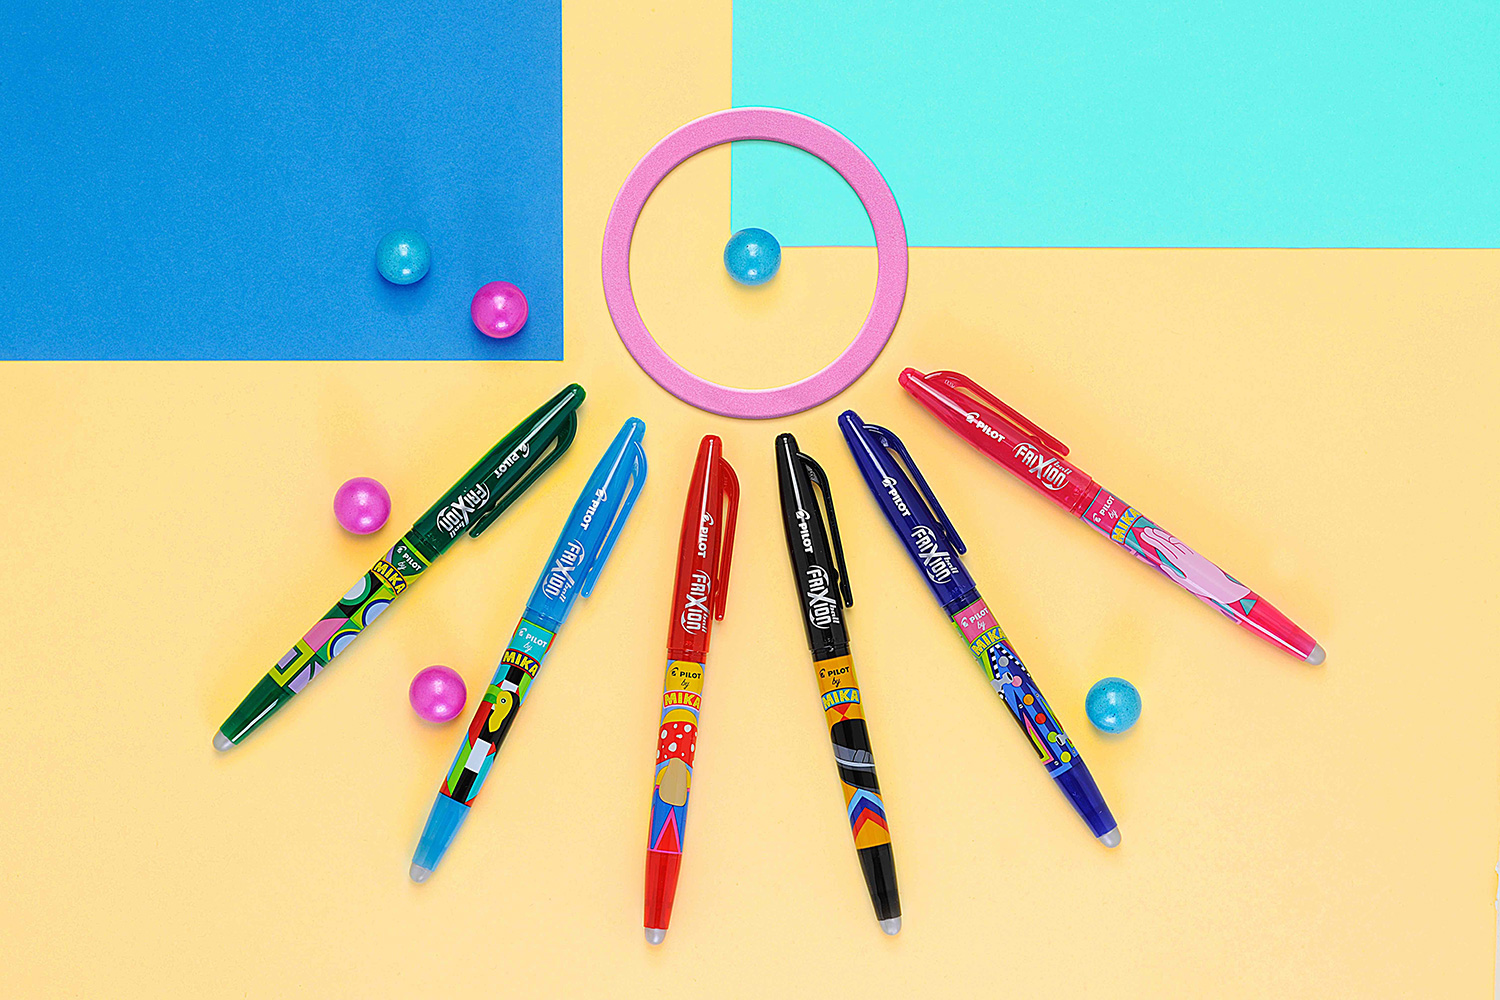 stylo à bille 10 couleurs pop corn - HEMA